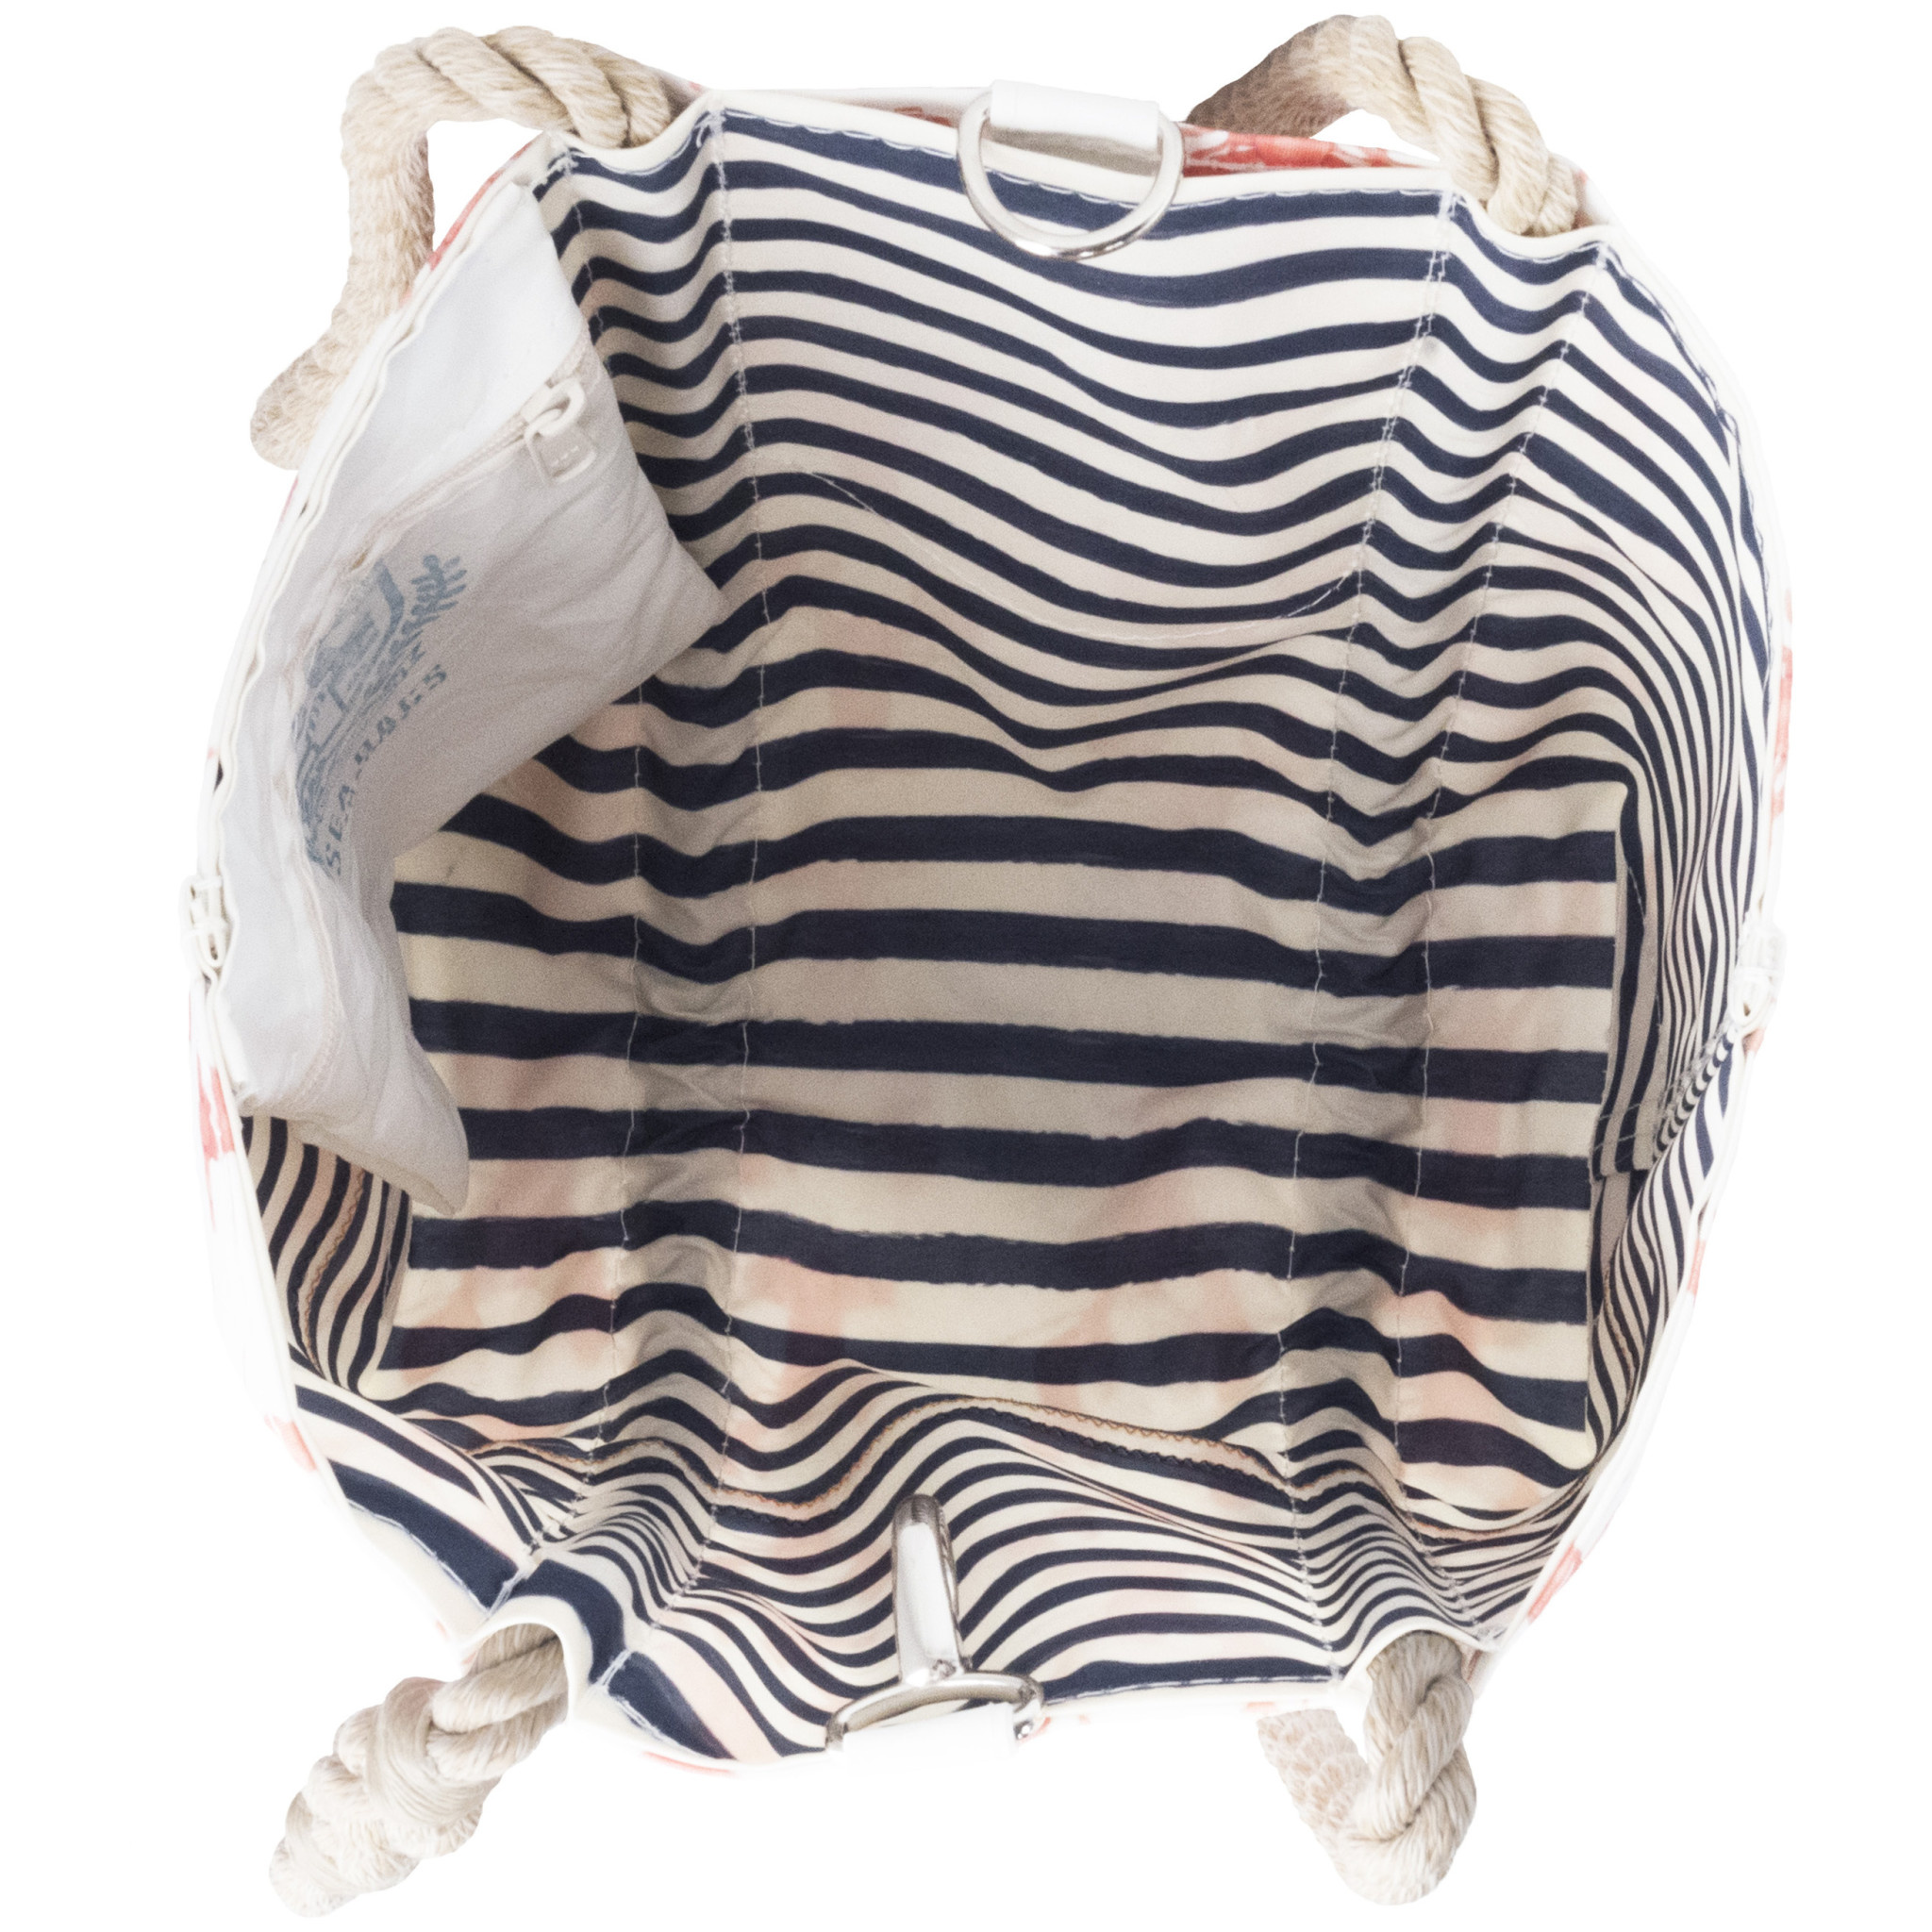 Sea Bags Sara Fitz - Lobster - Small Handbag Tote - Hemp Handle with Clasp